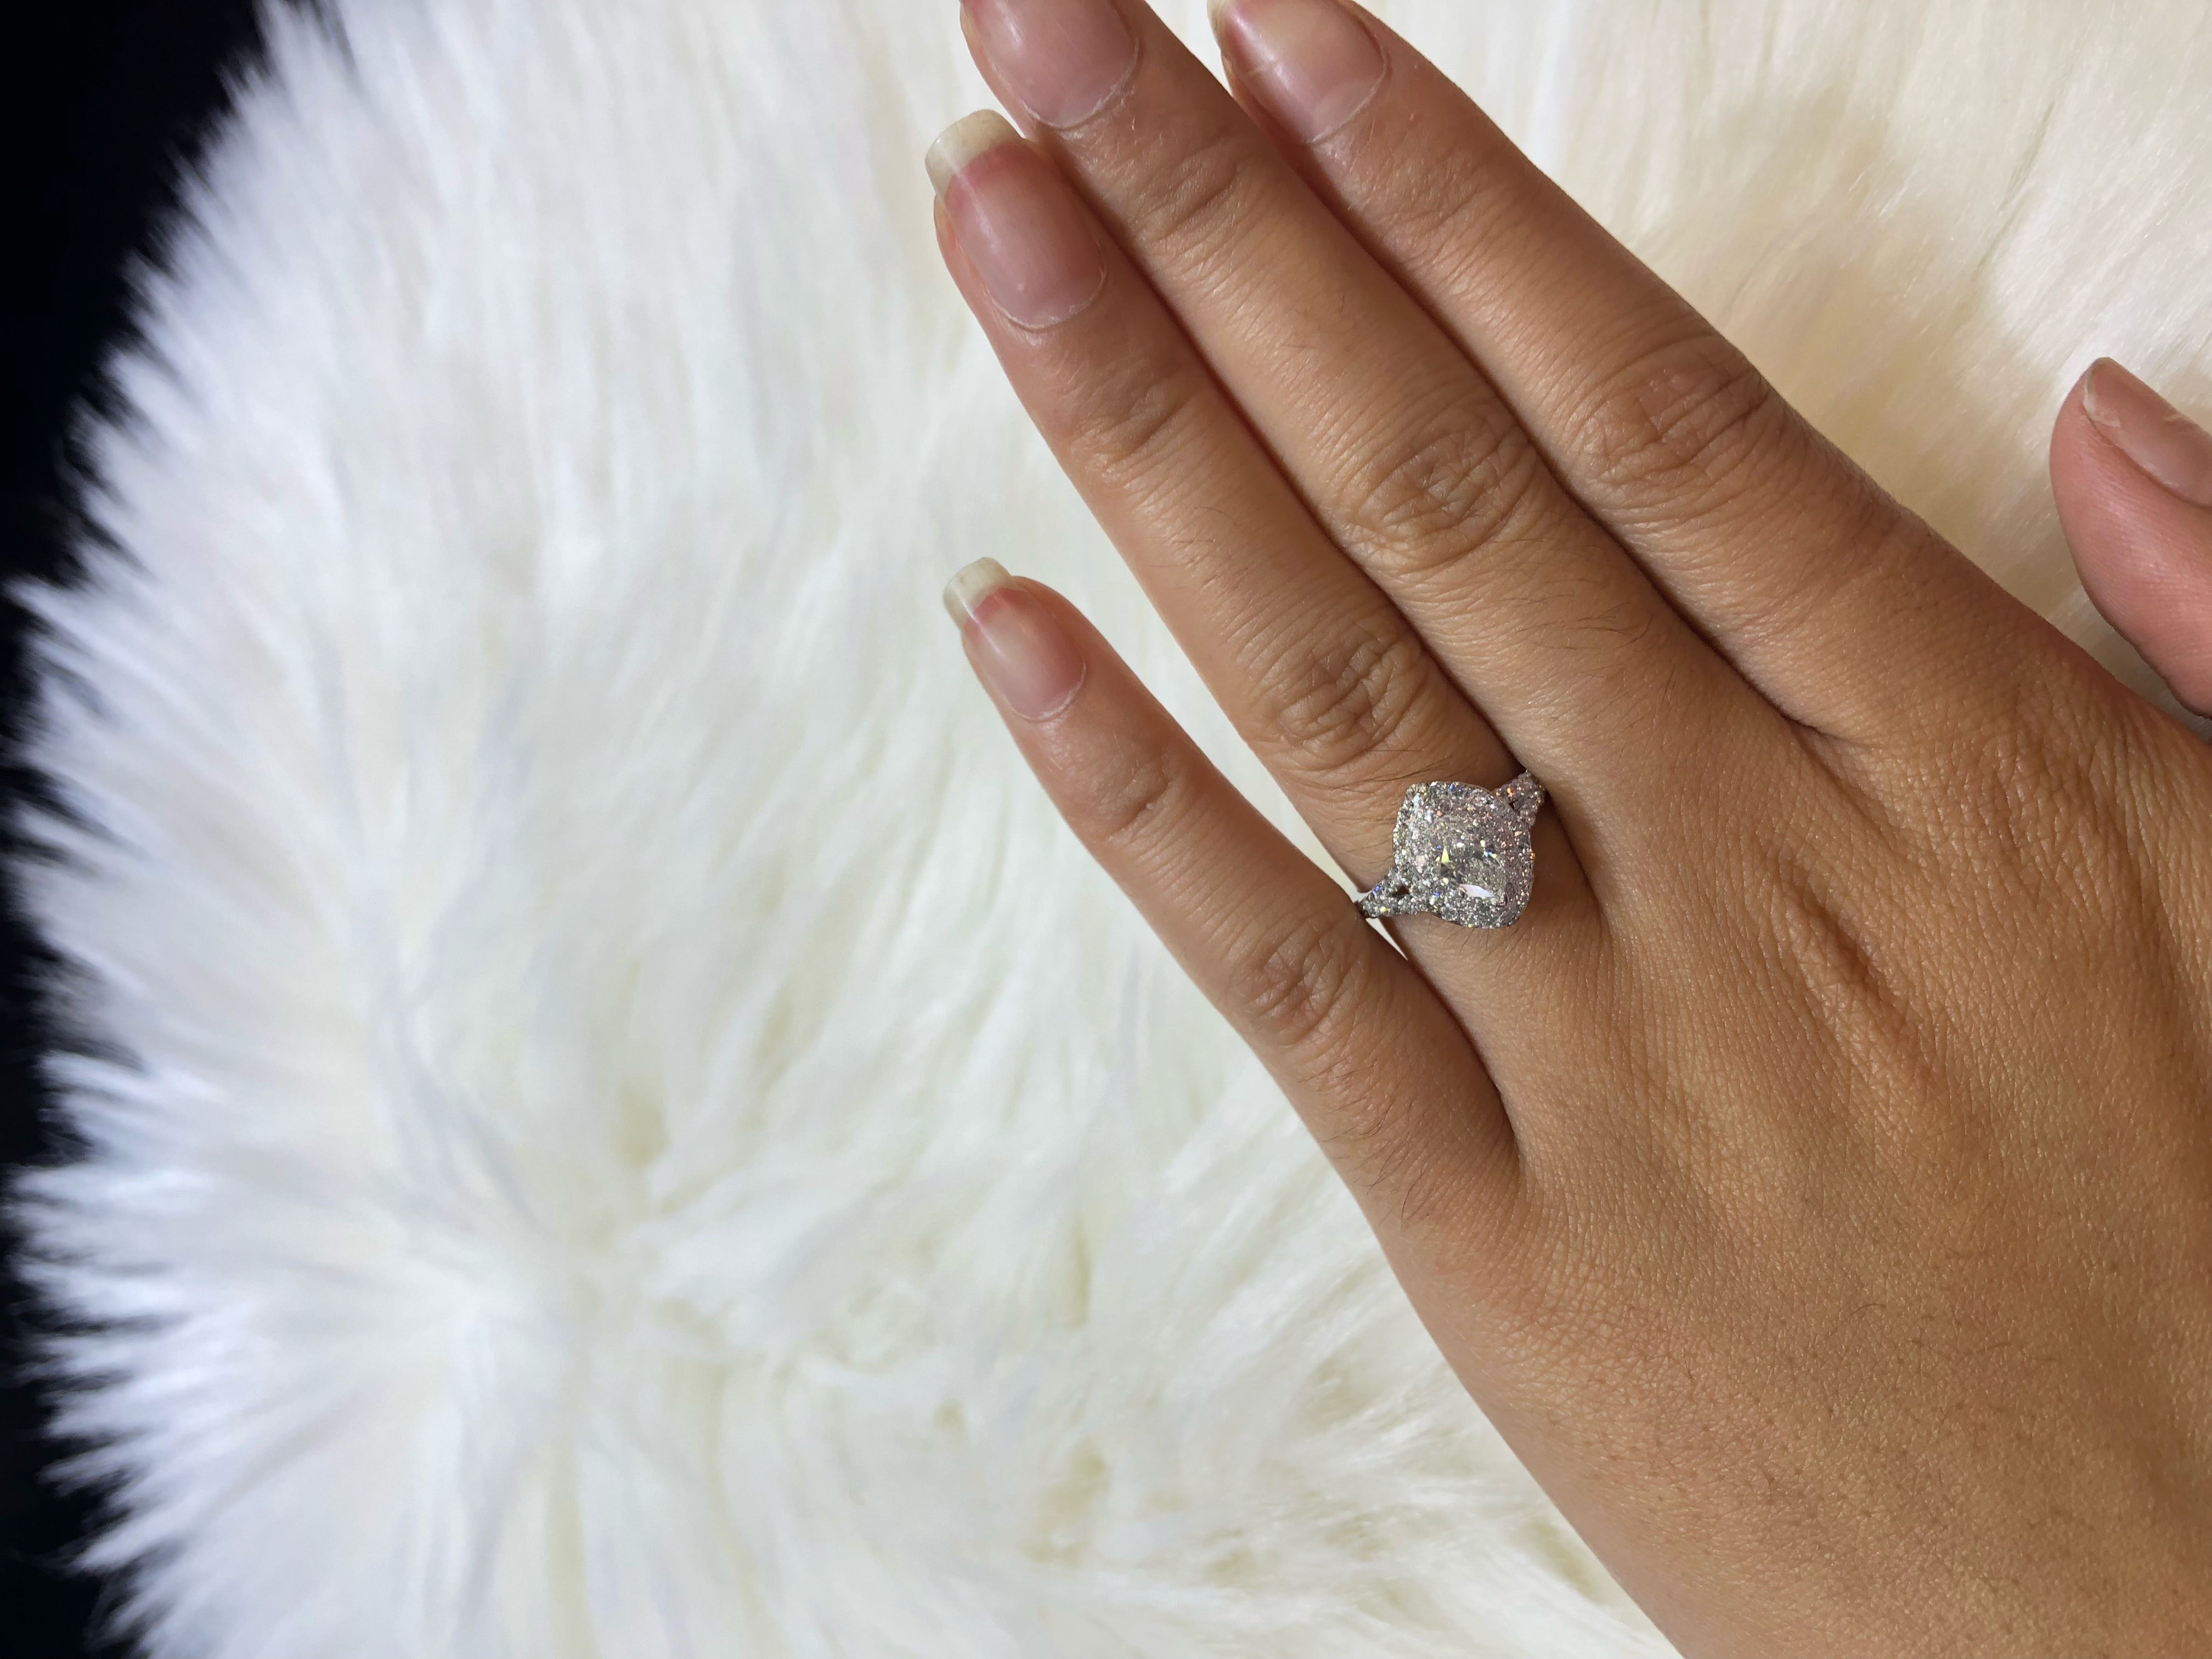 Marquise Diamond Engagement Ring 2.07 ct tw 14K White Gold DENG048